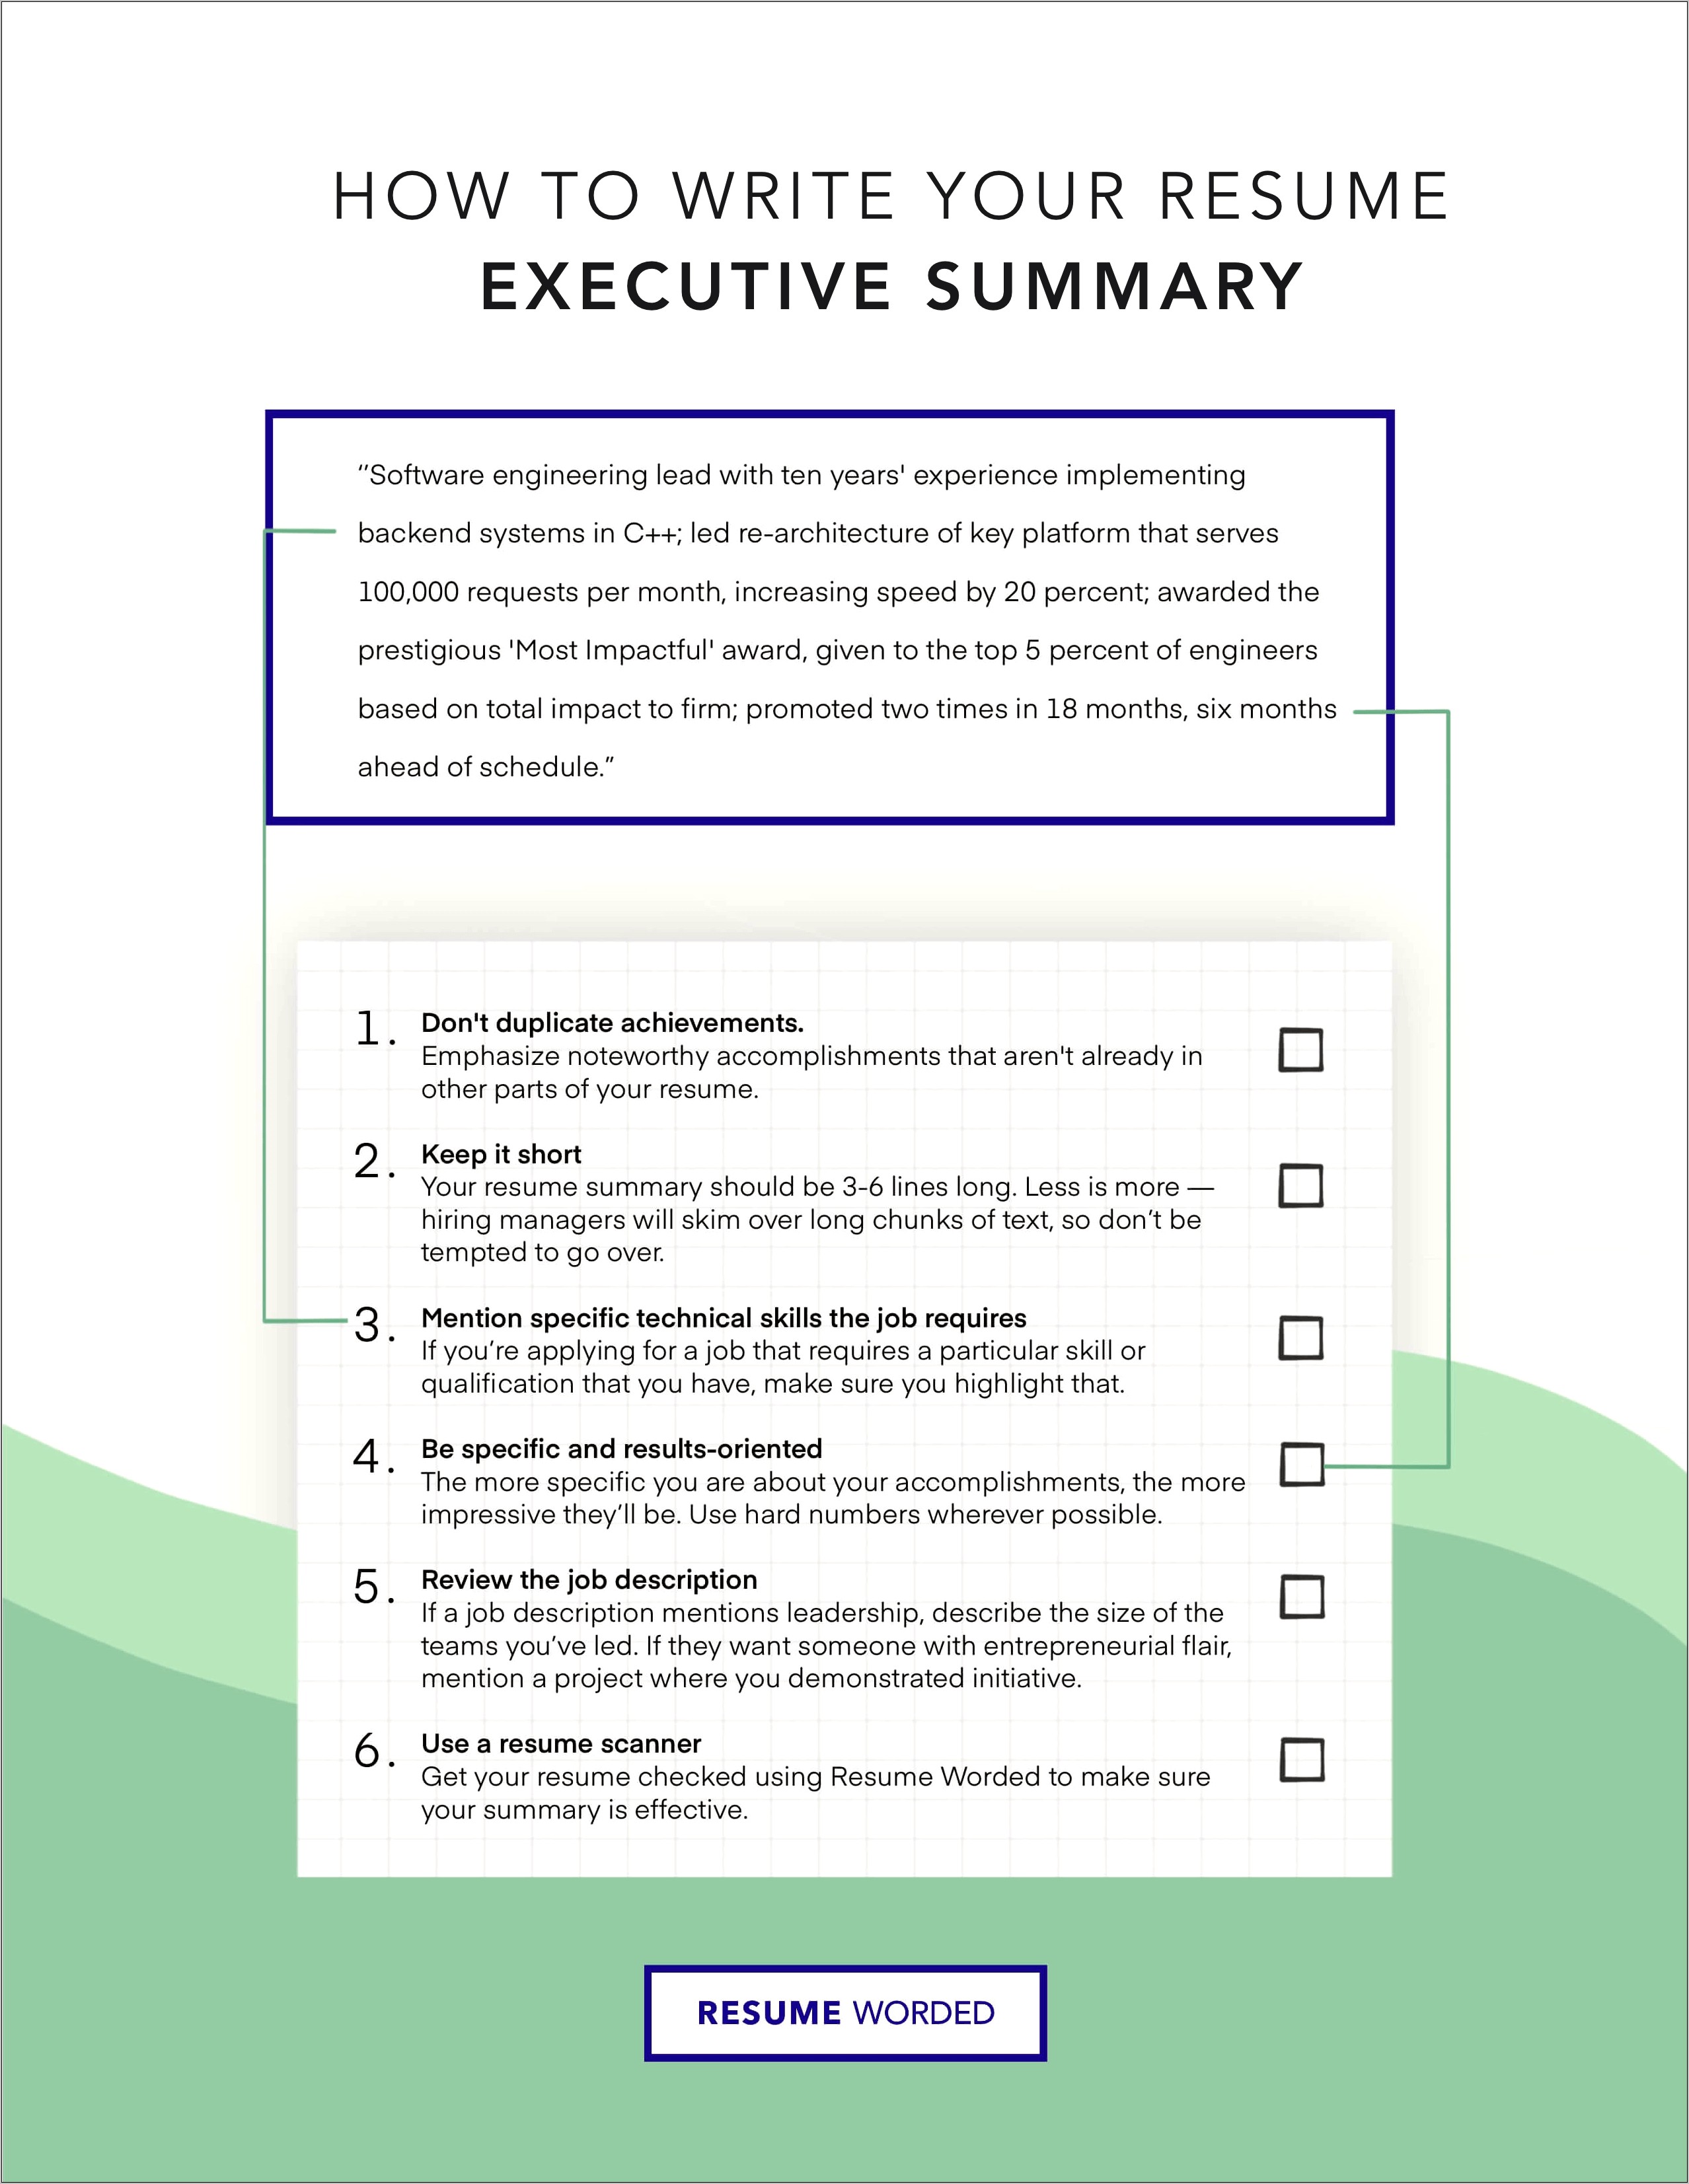 Resume Example With Executive Summary